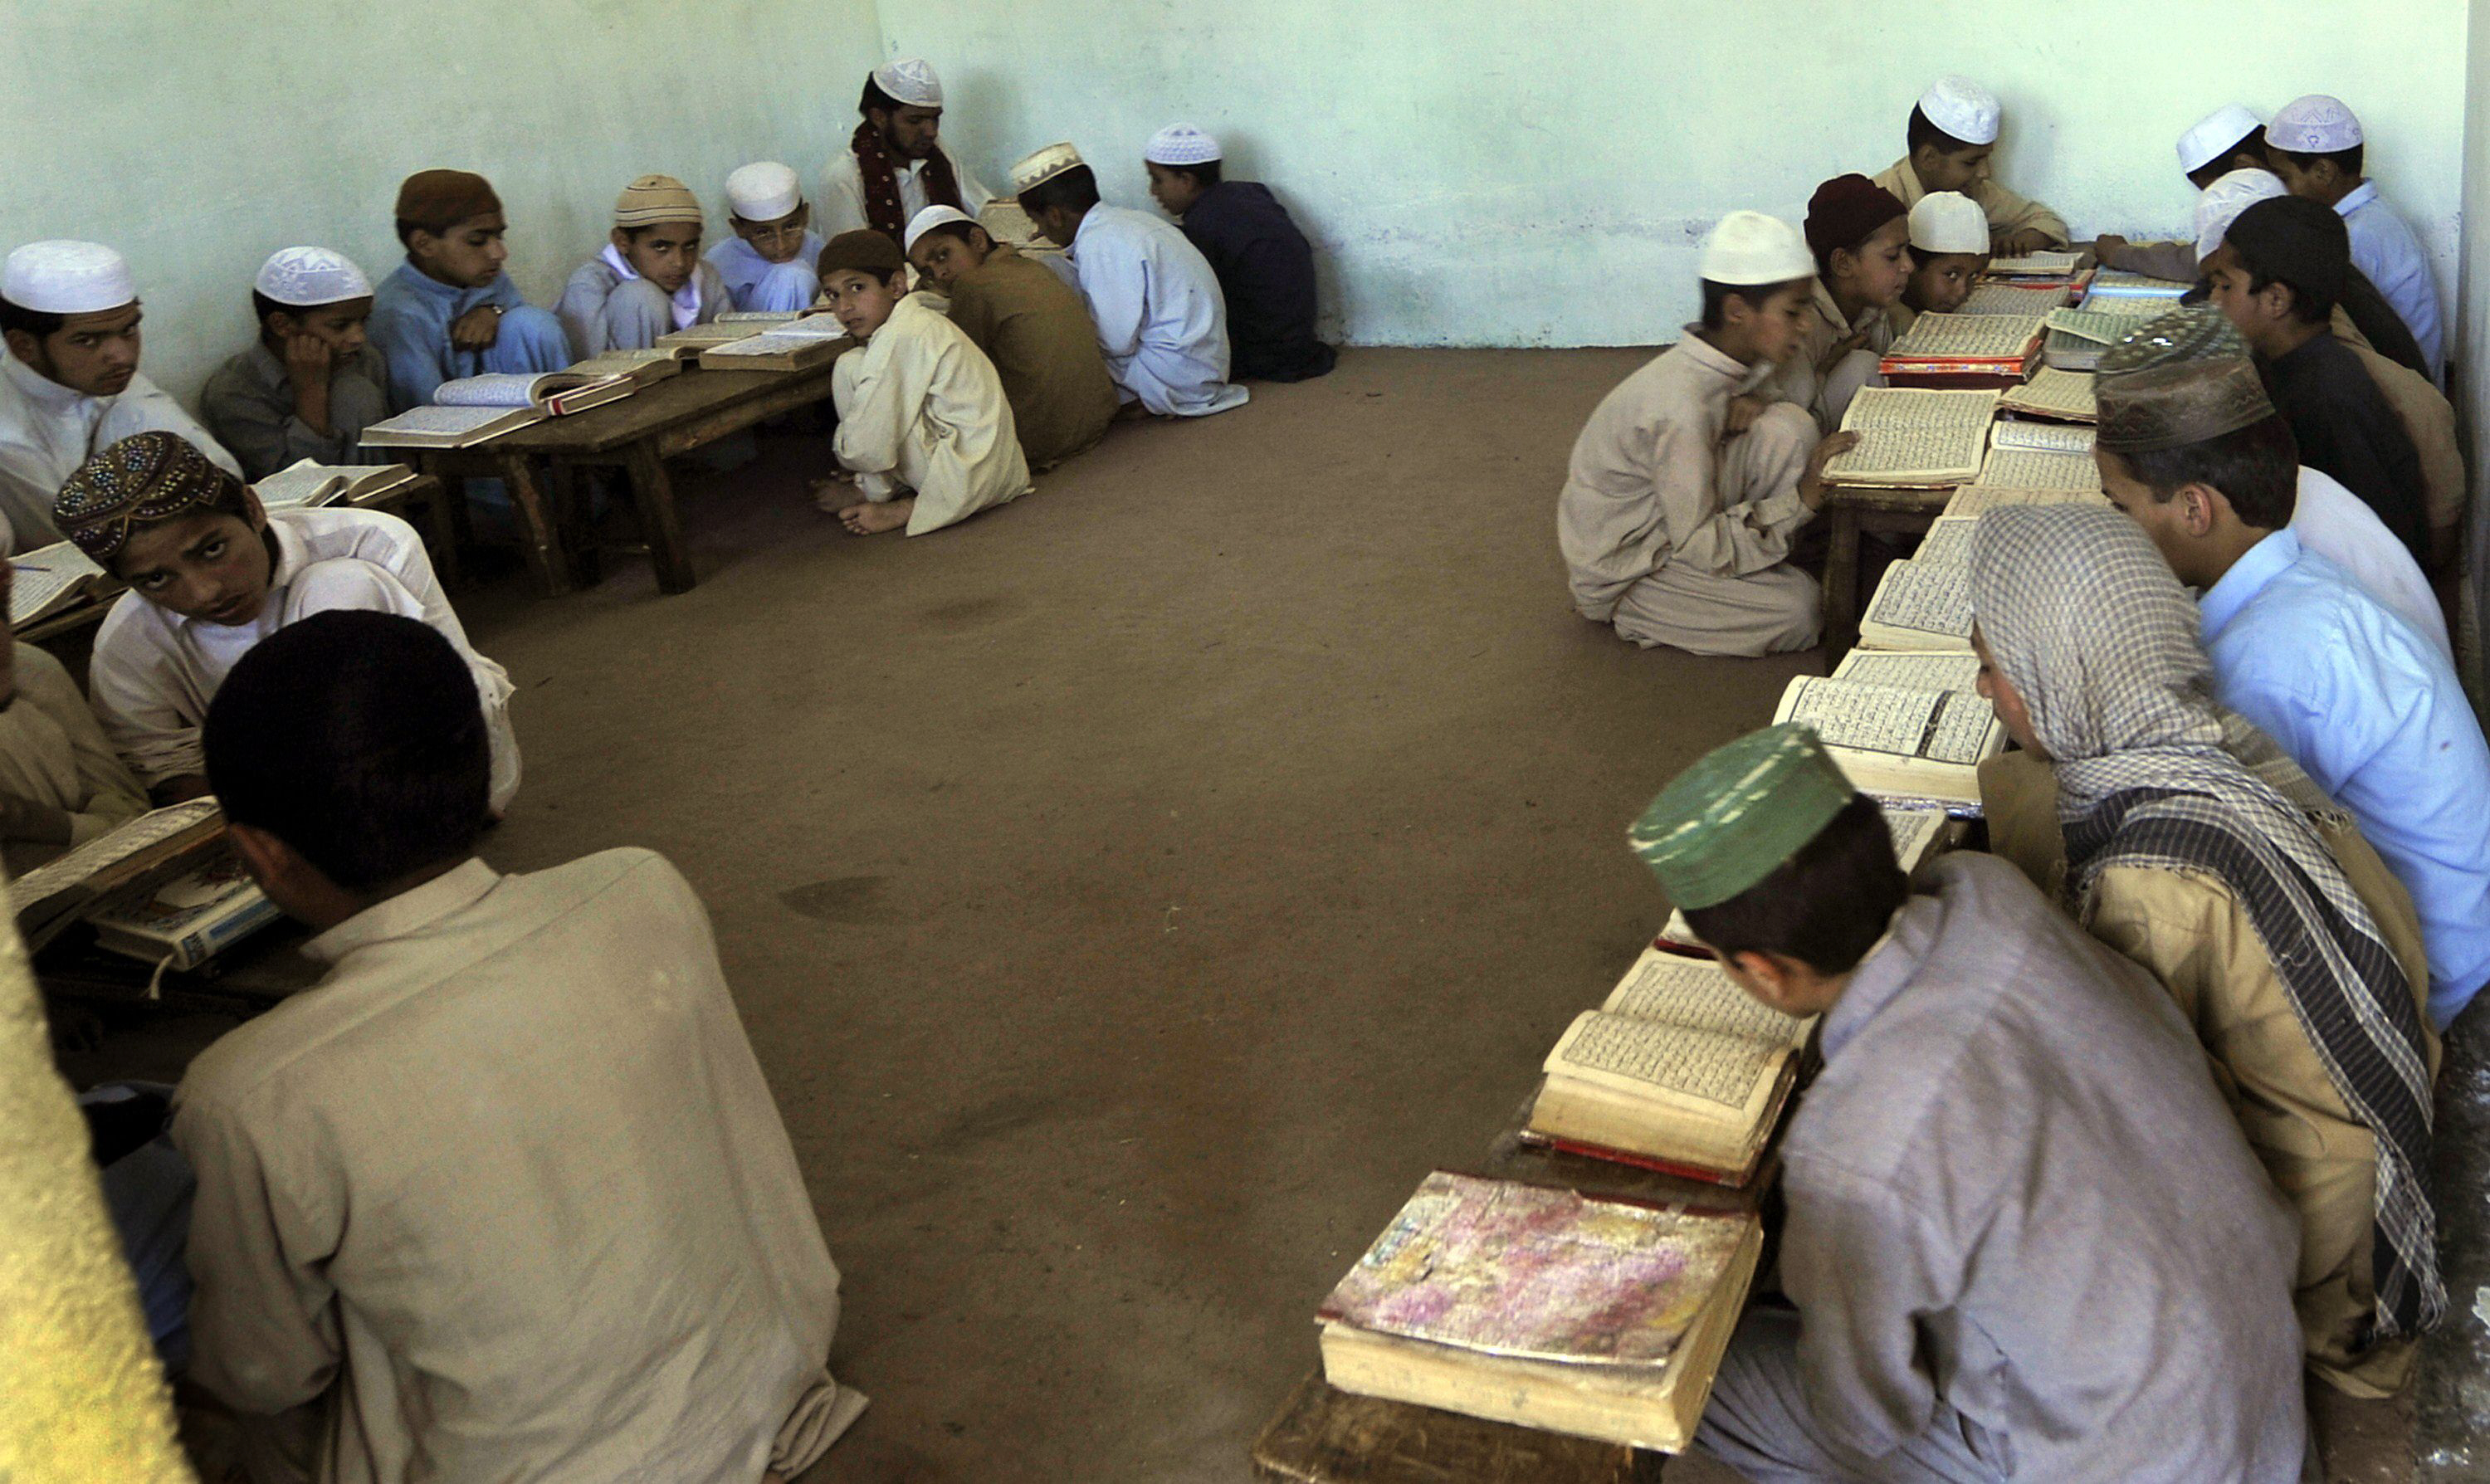 nap to ensure madrassas offer balanced education